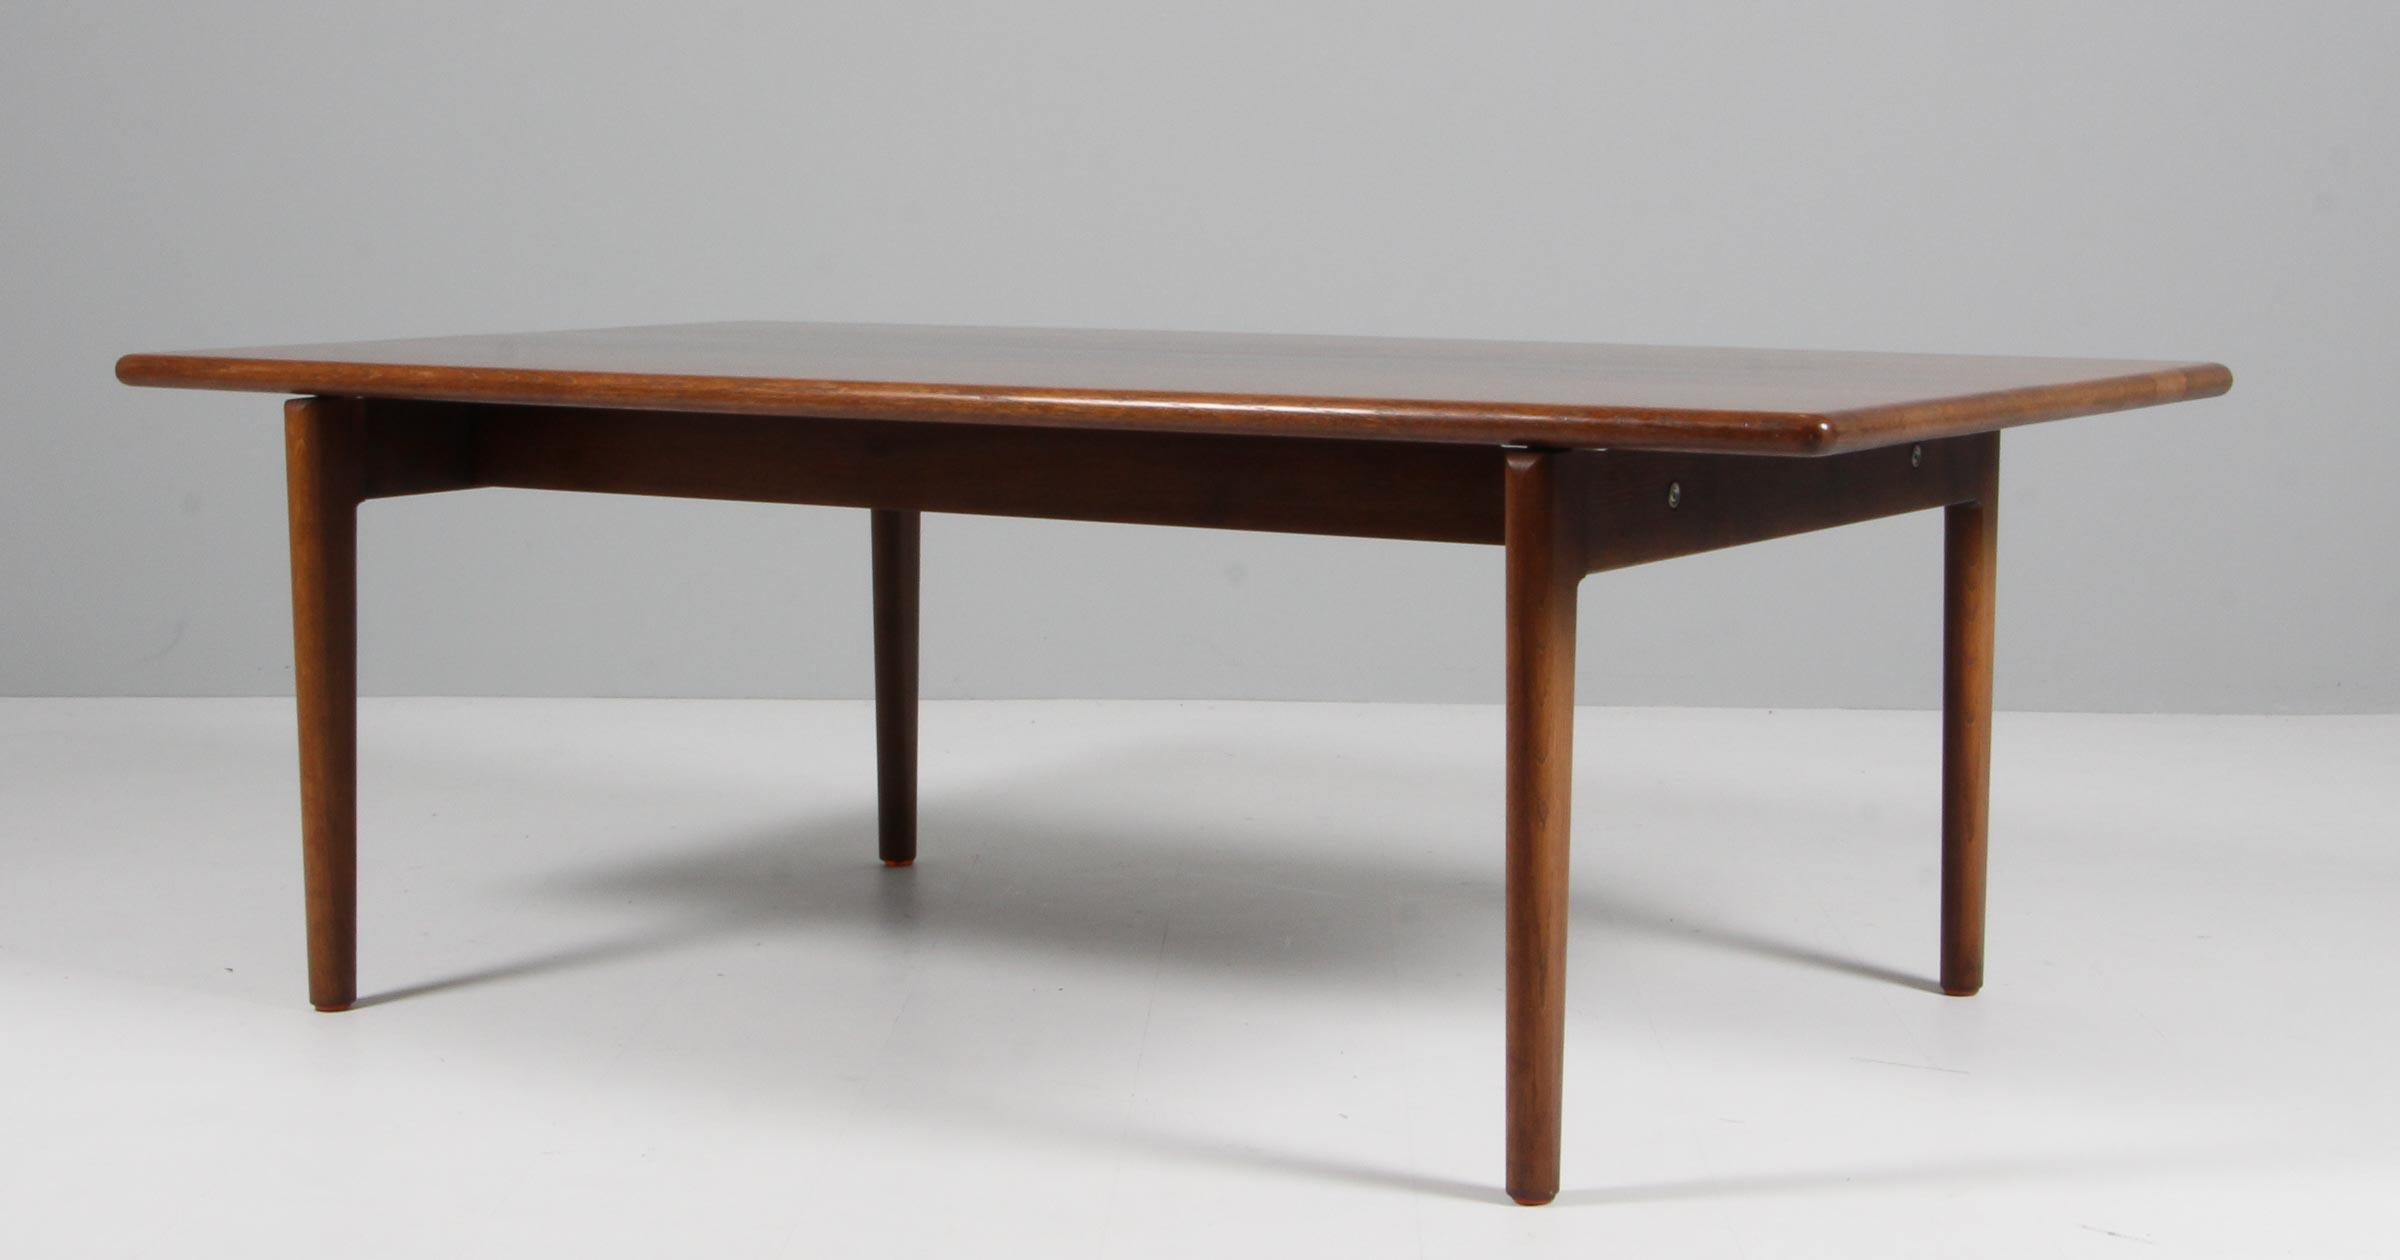 Hans J. Wegner coffee table, solid smoked oak.

Model GE-15, made by GETAMA, Denmark.